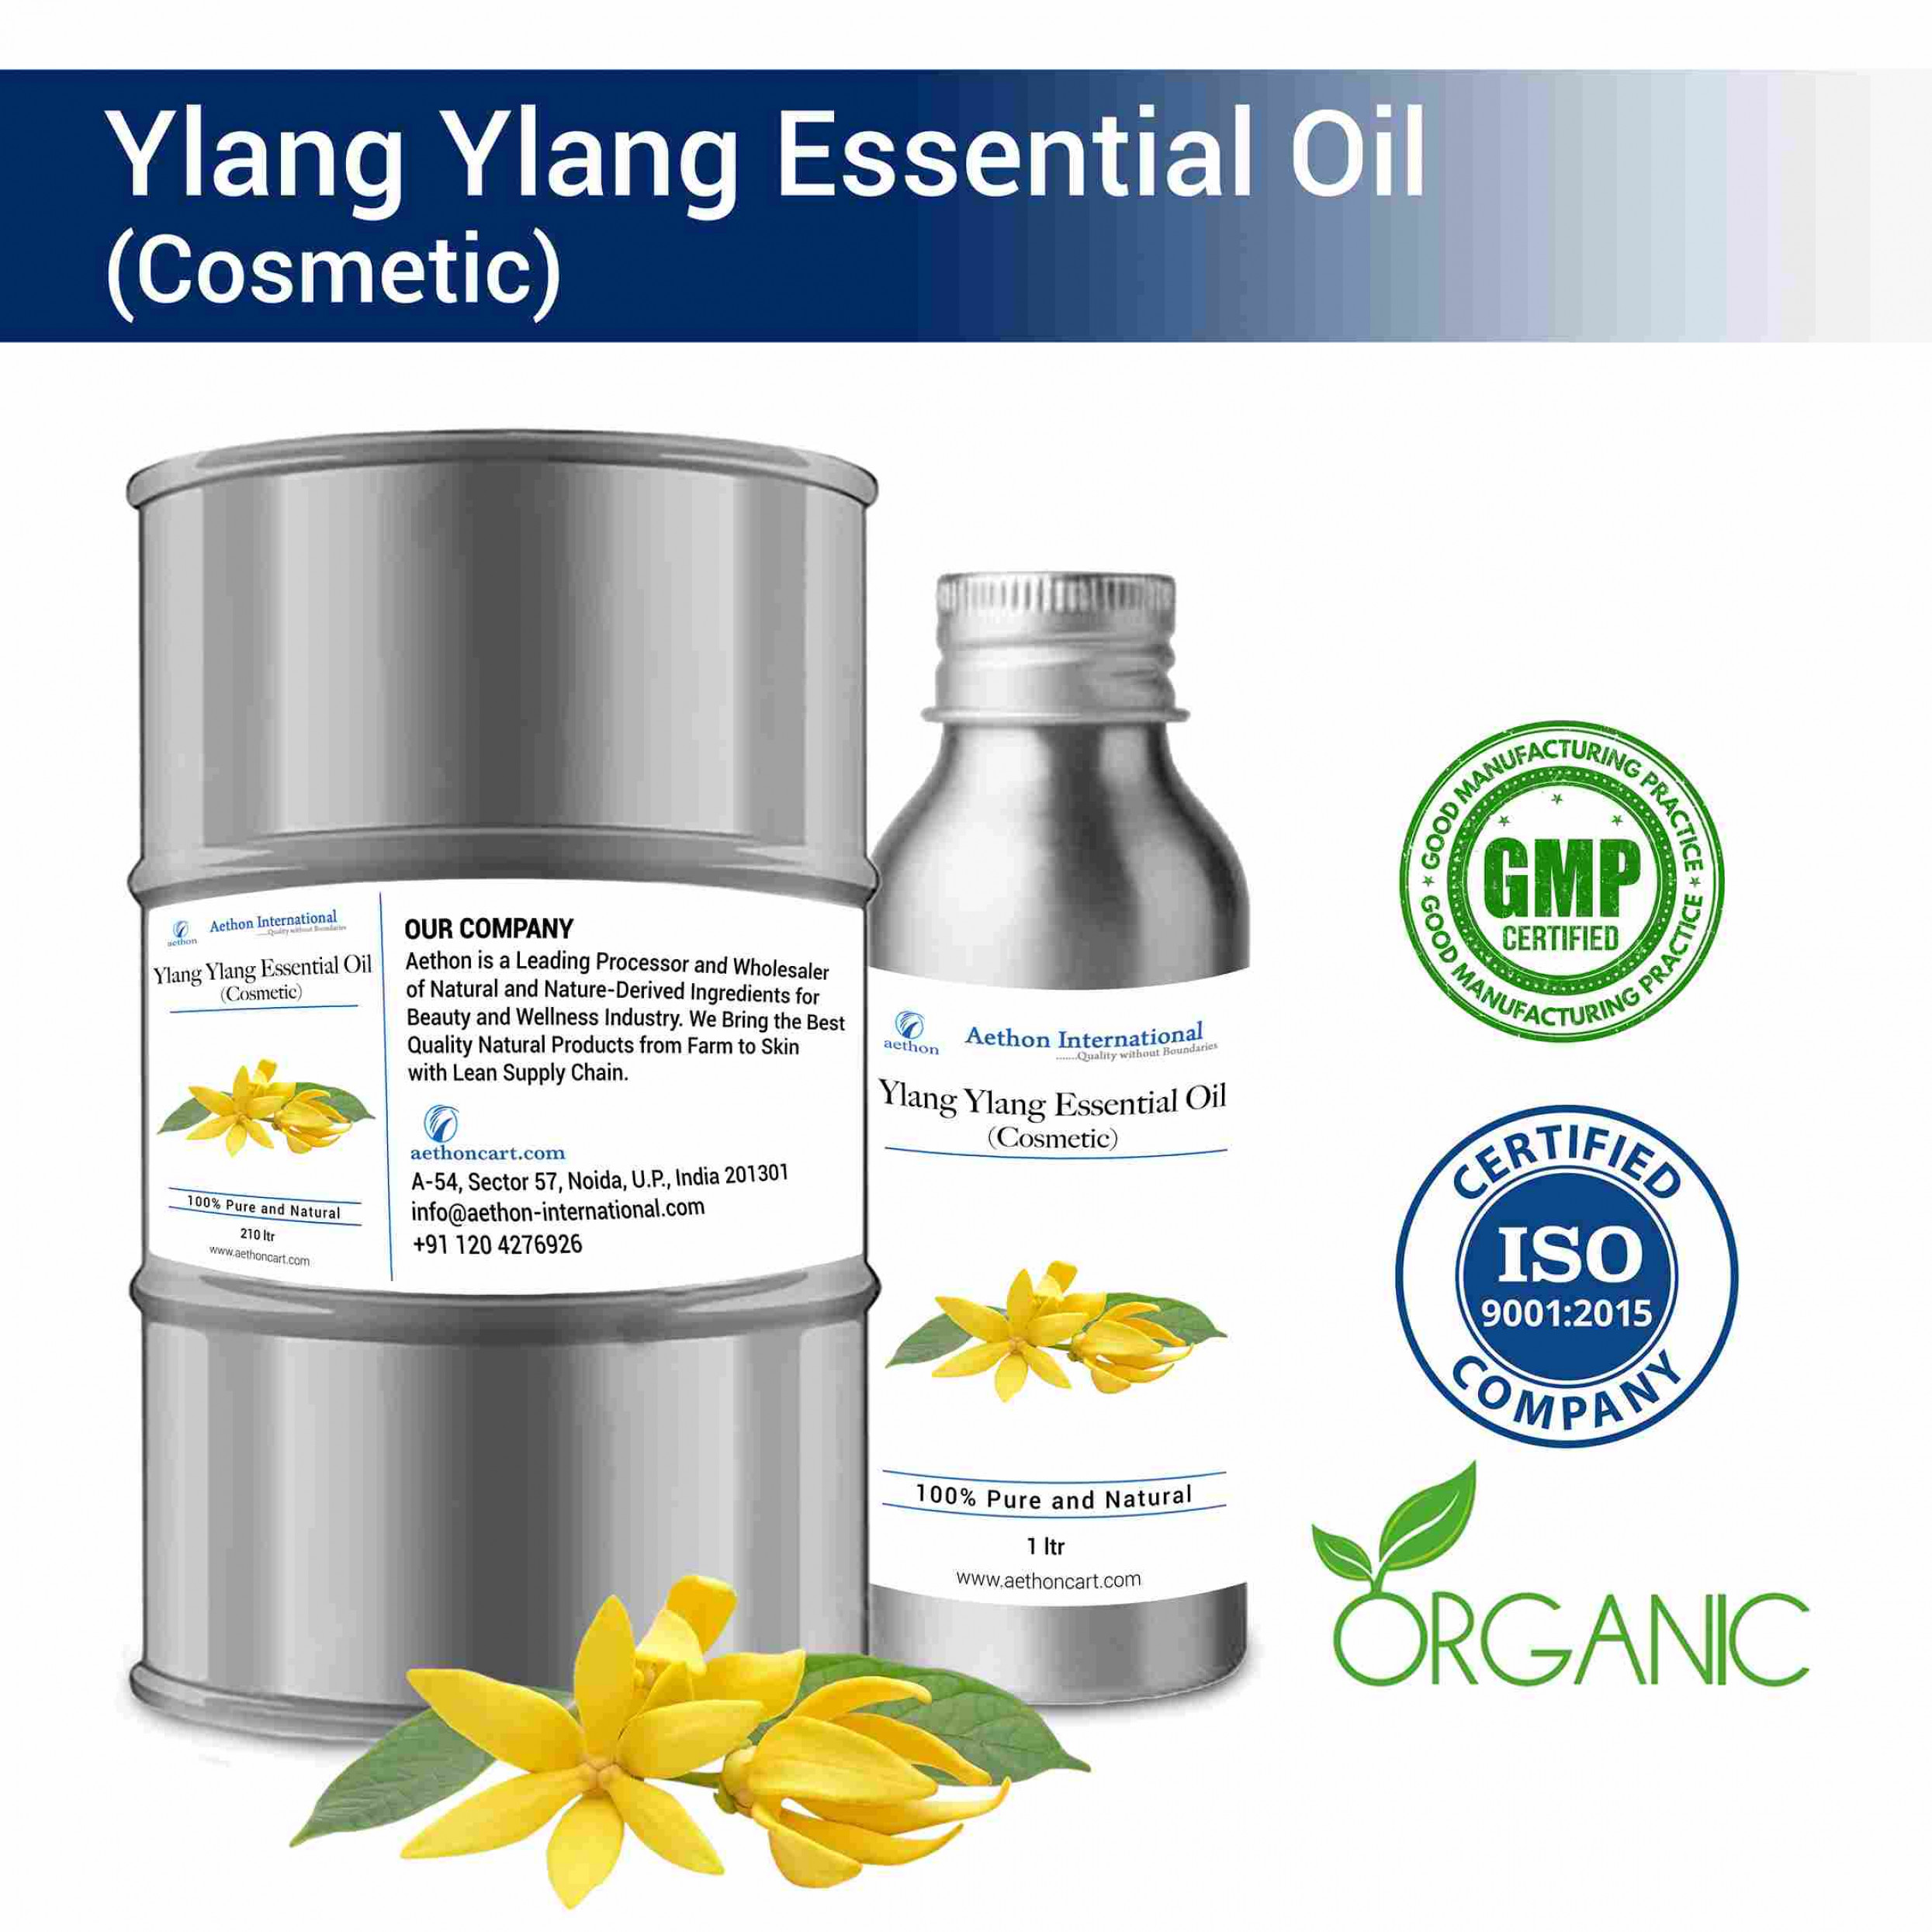 Ylang Ylang Essential Oil (Cosmetic)